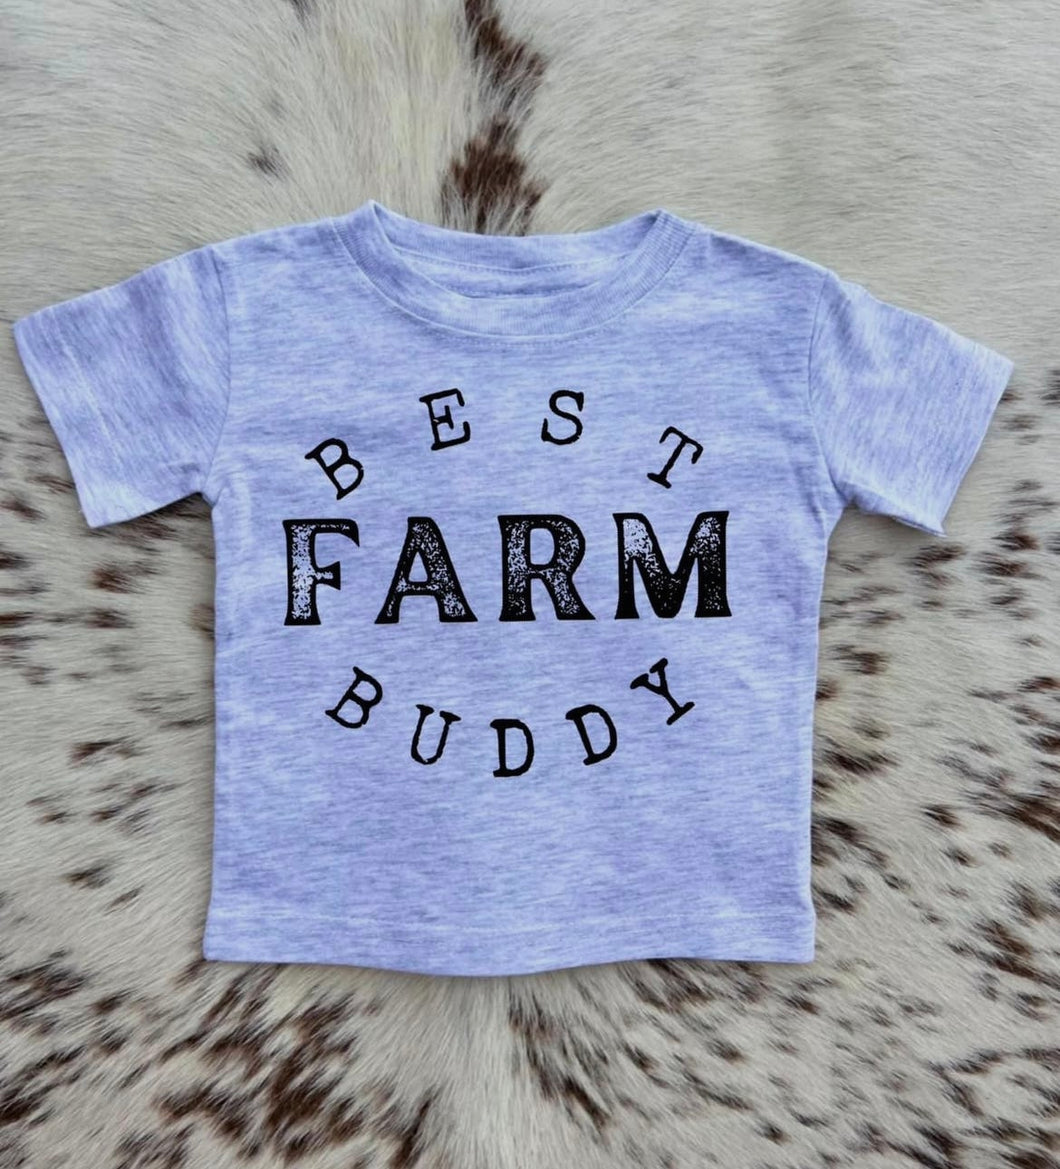 best farm buddy tee